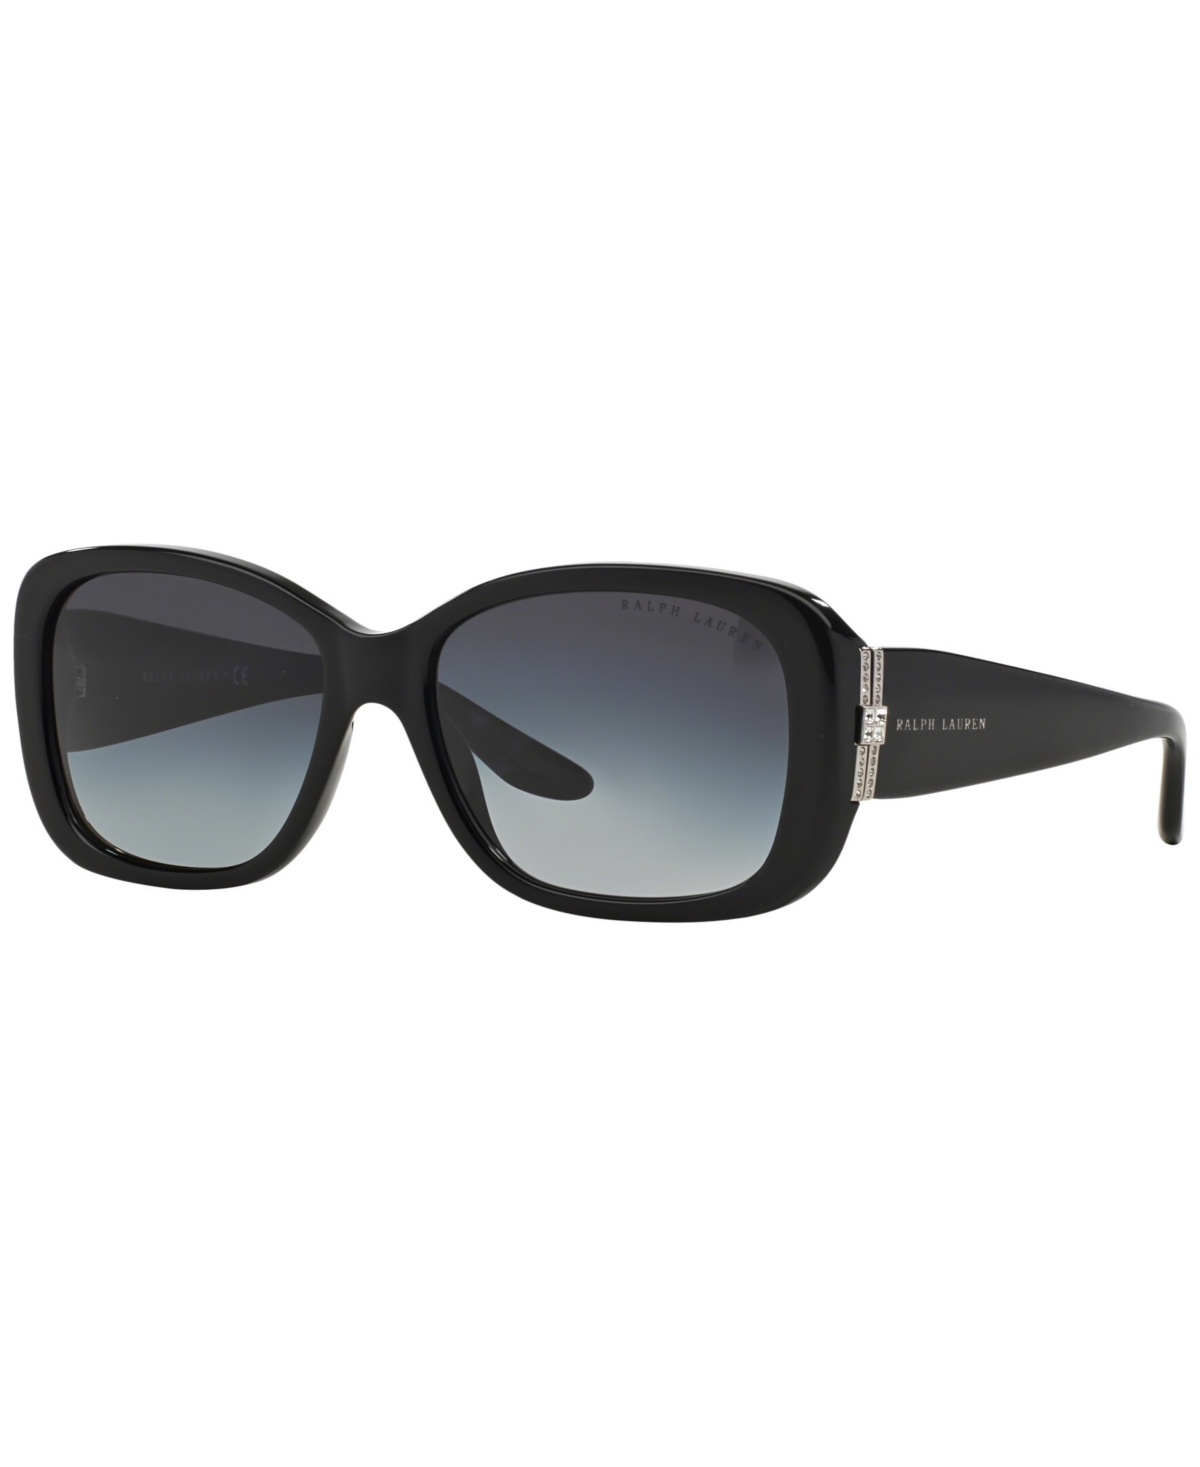 Ralph Lauren Women's Sunglasses, Rl8127b In Shiny Black